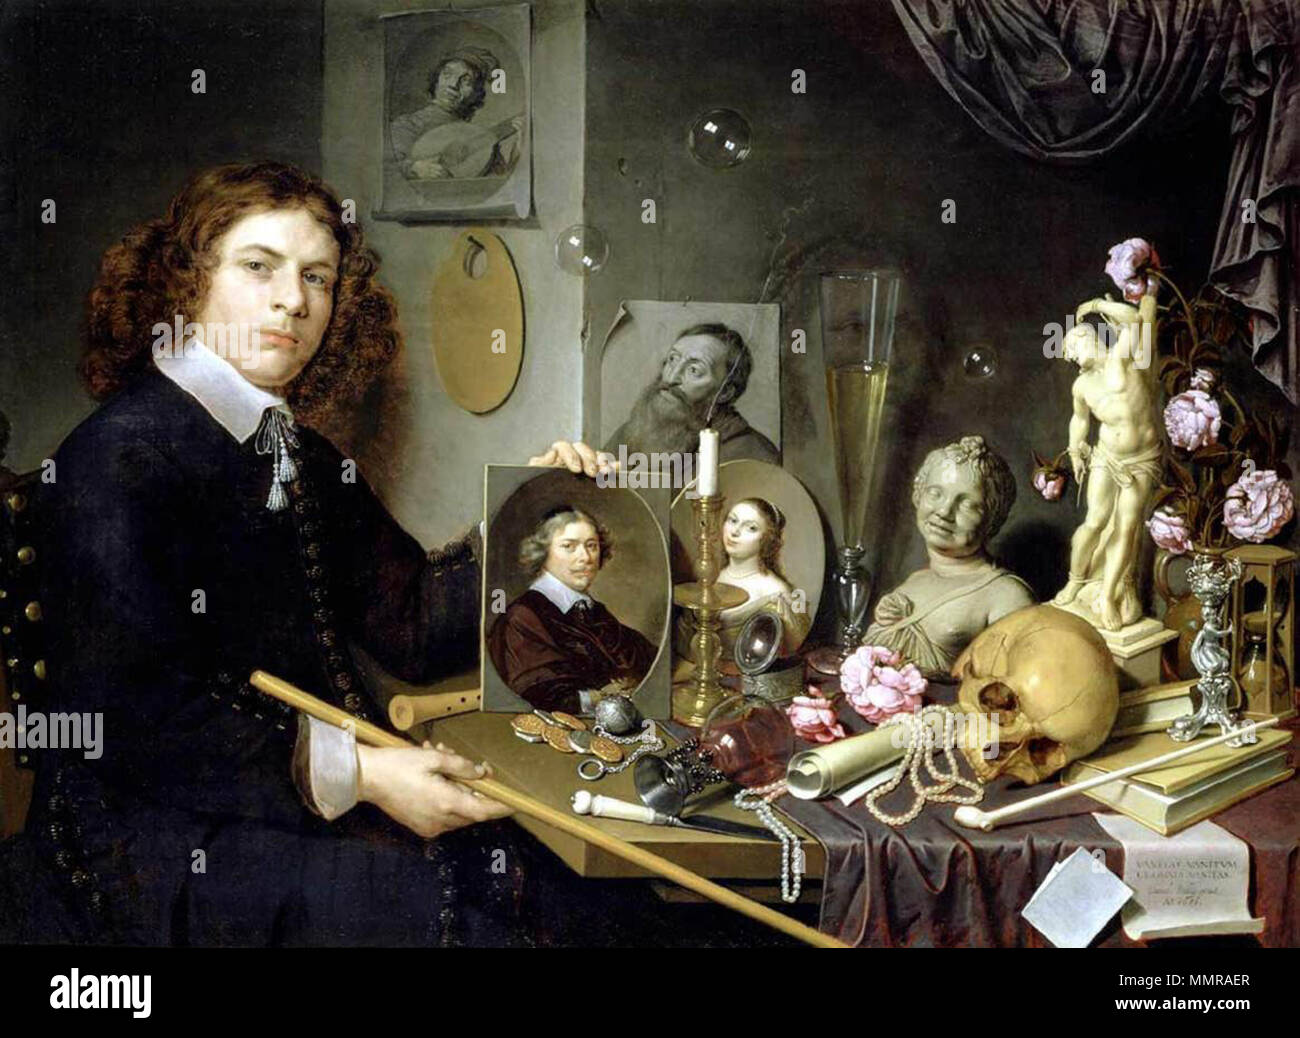 Bailly, David - Autoritratto con Vanitas simboli - 1651 Foto Stock